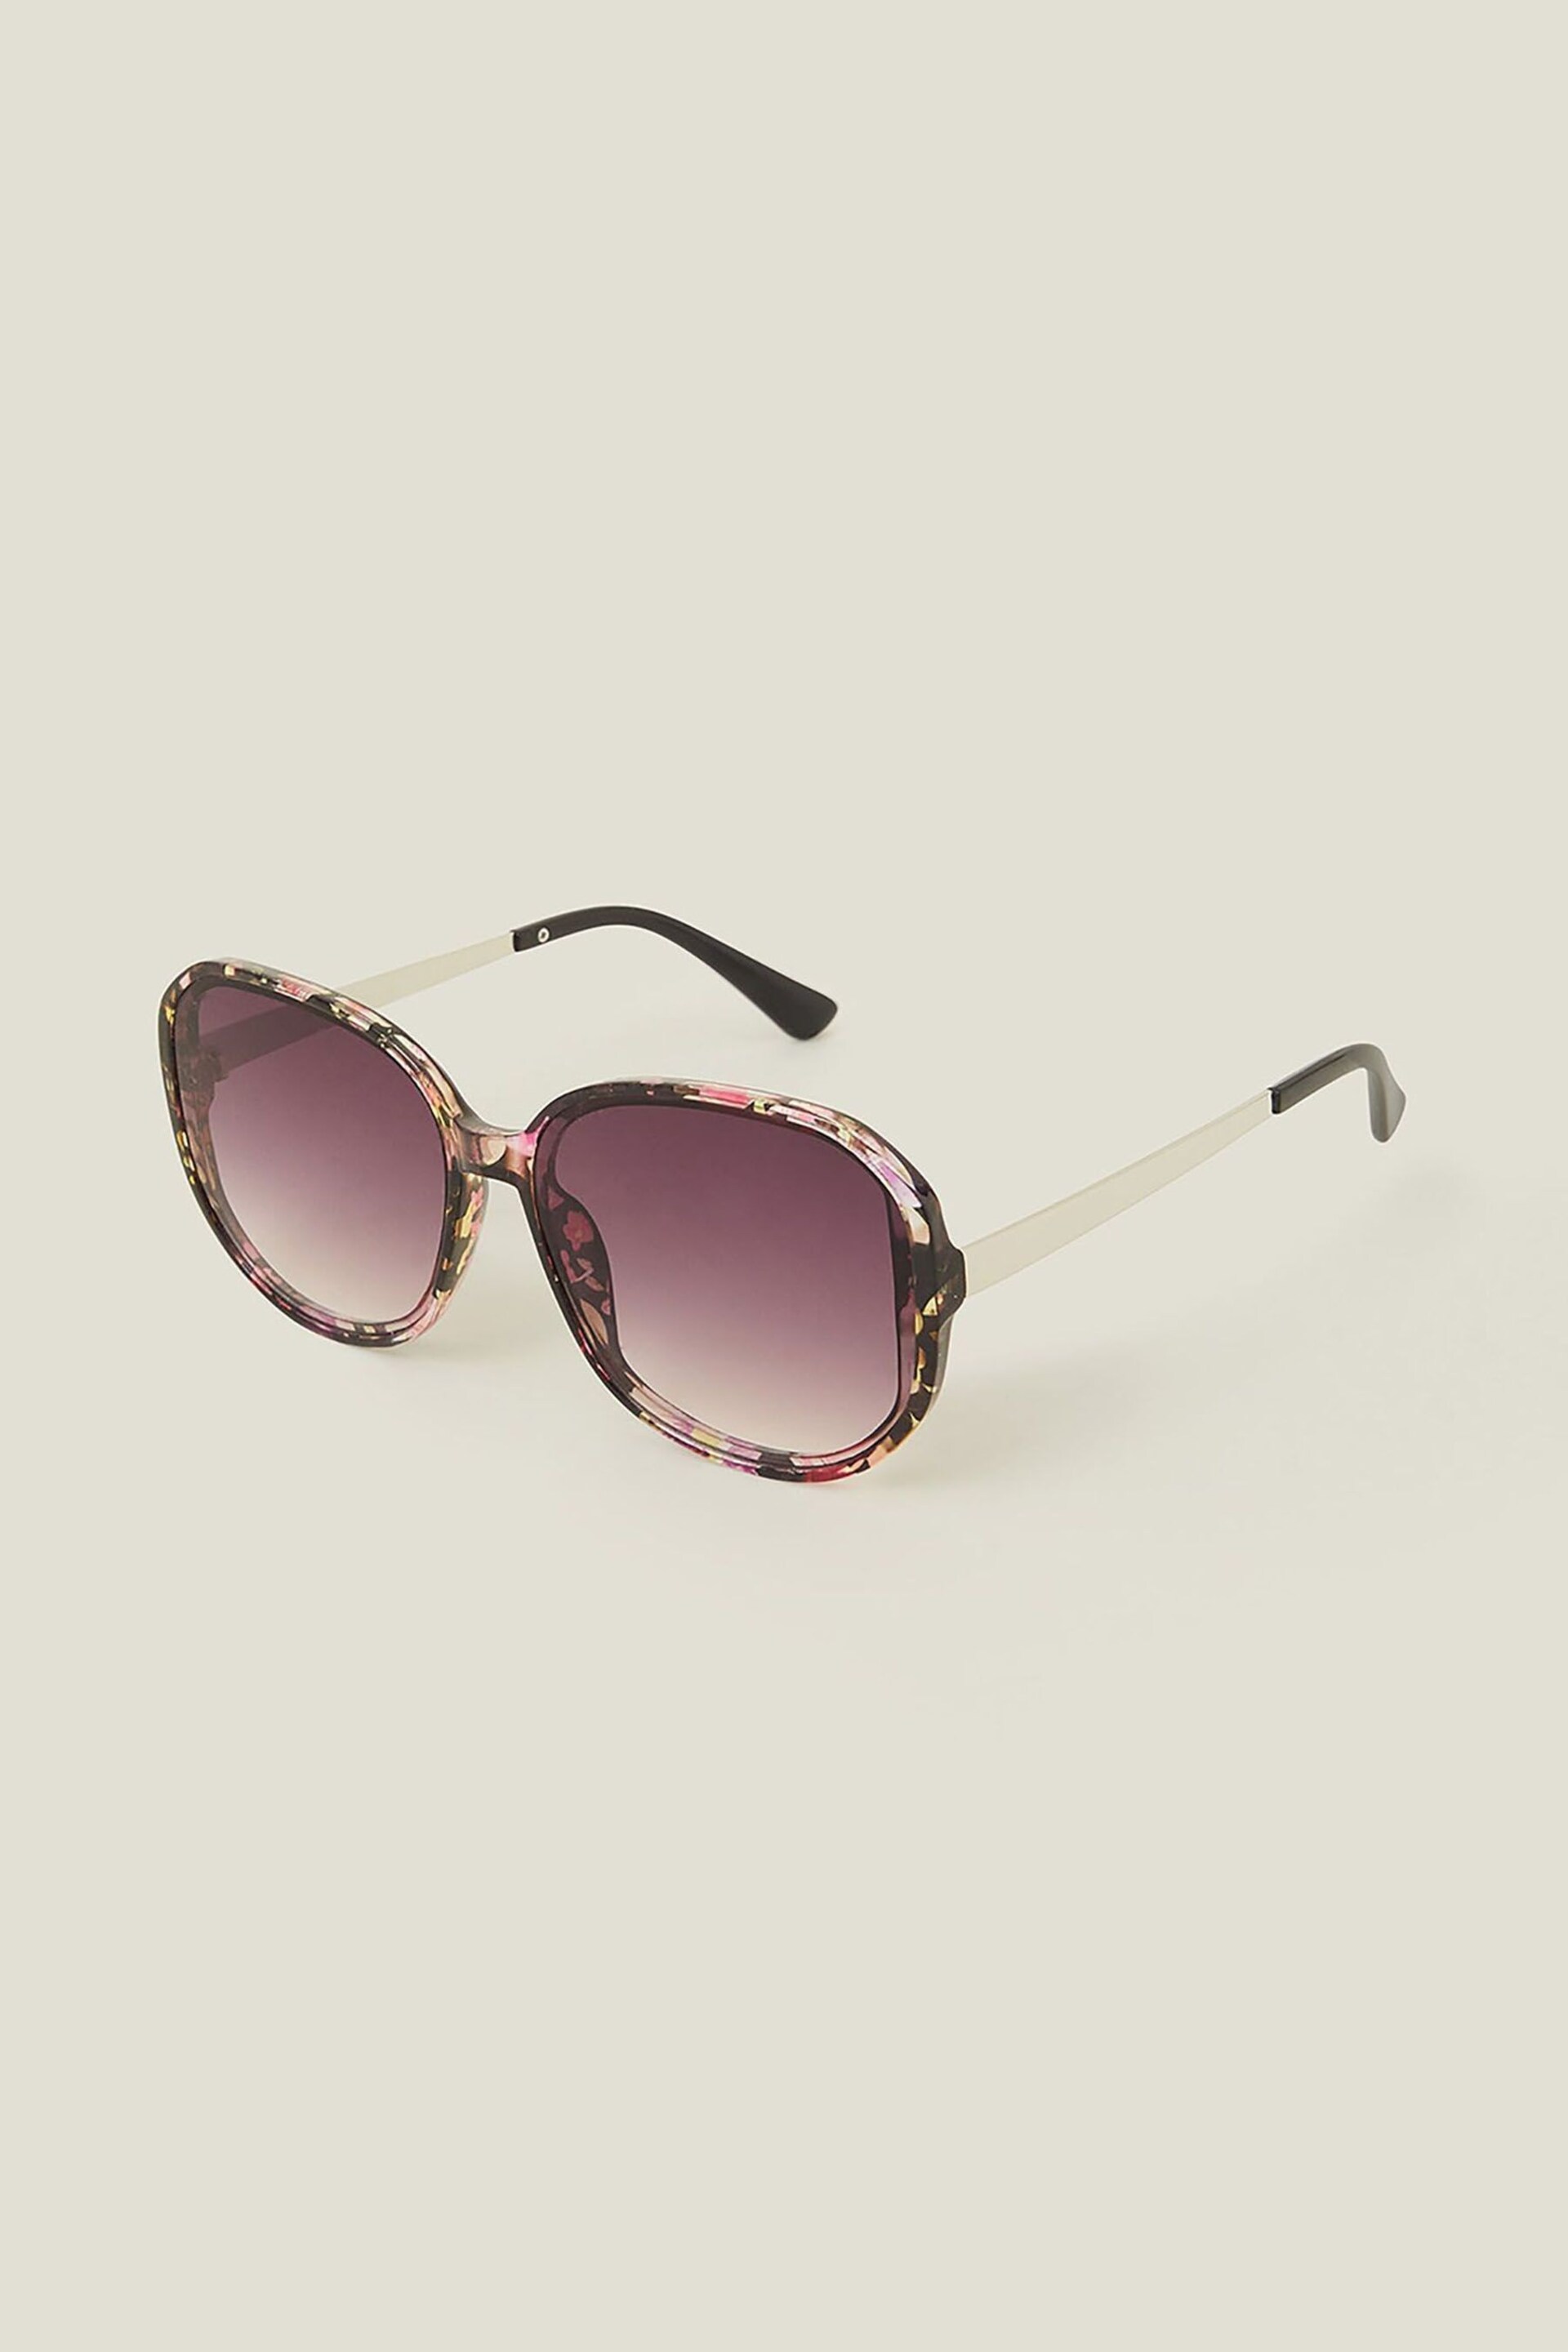 Accessorize Purple Oversized Resin Frame Sunglasses - Image 2 of 3